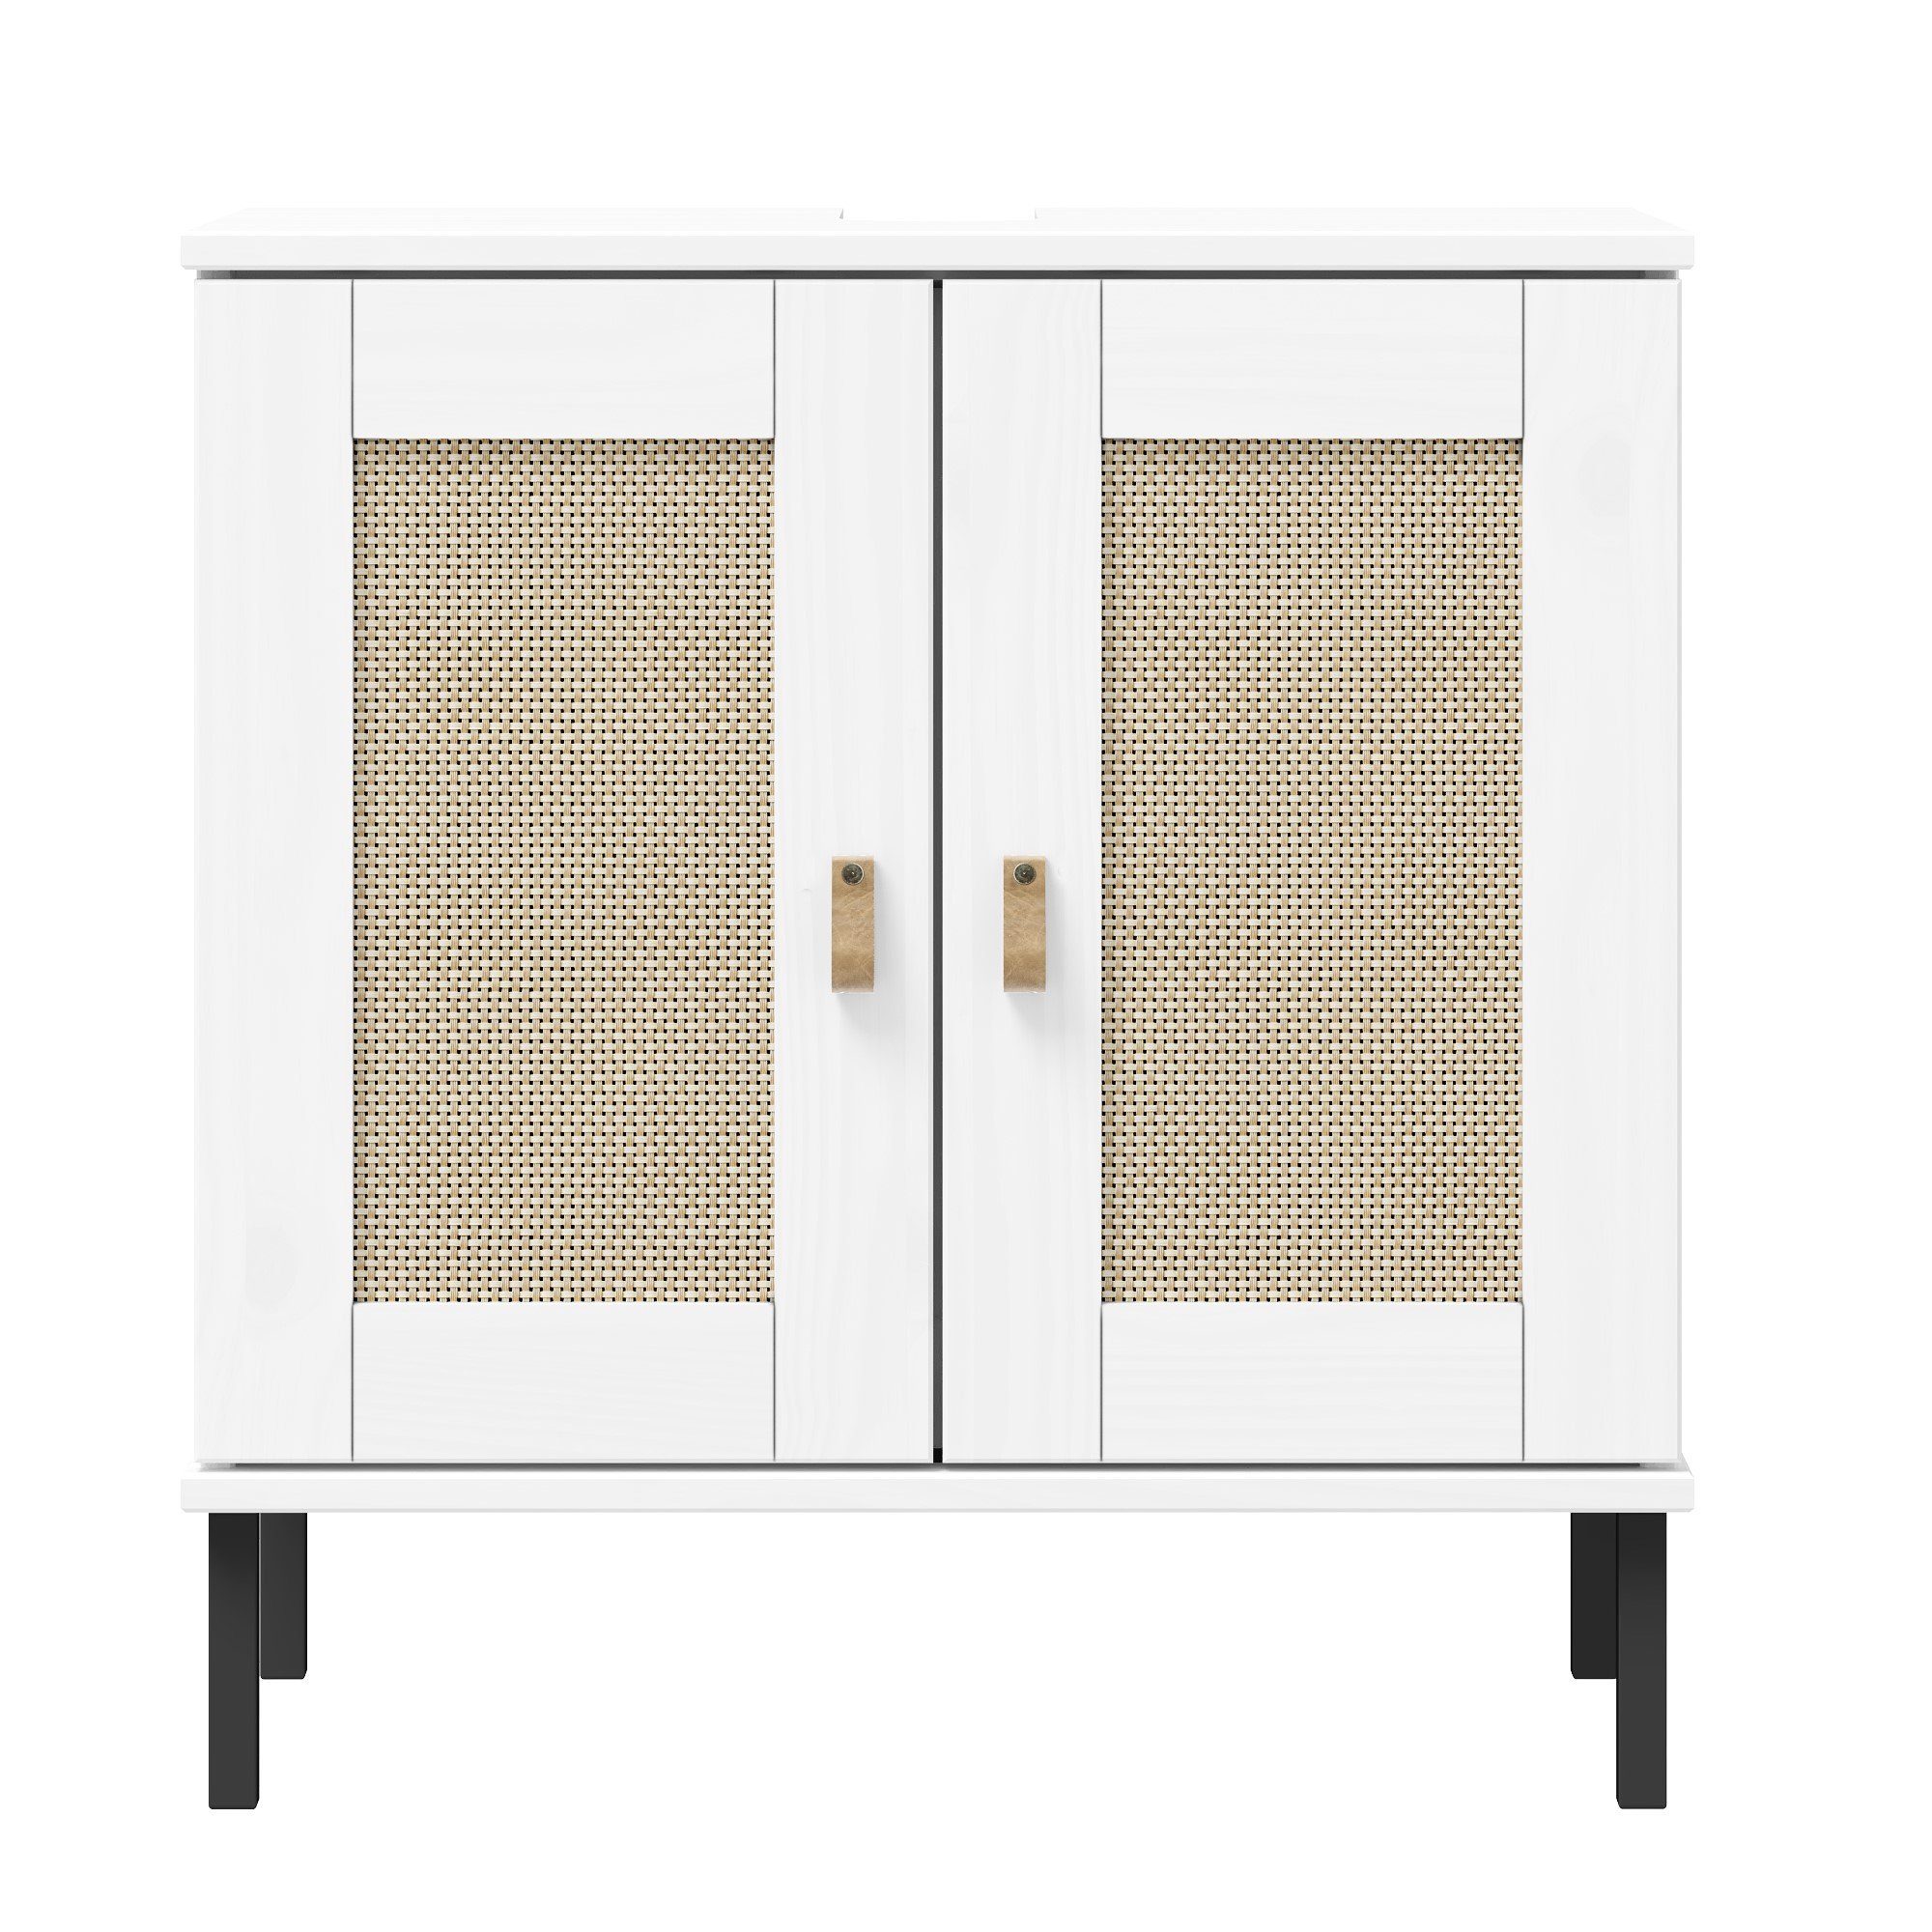 Woodroom Waschbeckenunterschrank Valencia Kiefer massiv lackiert, BxHxT 62x65x40 cm weiß